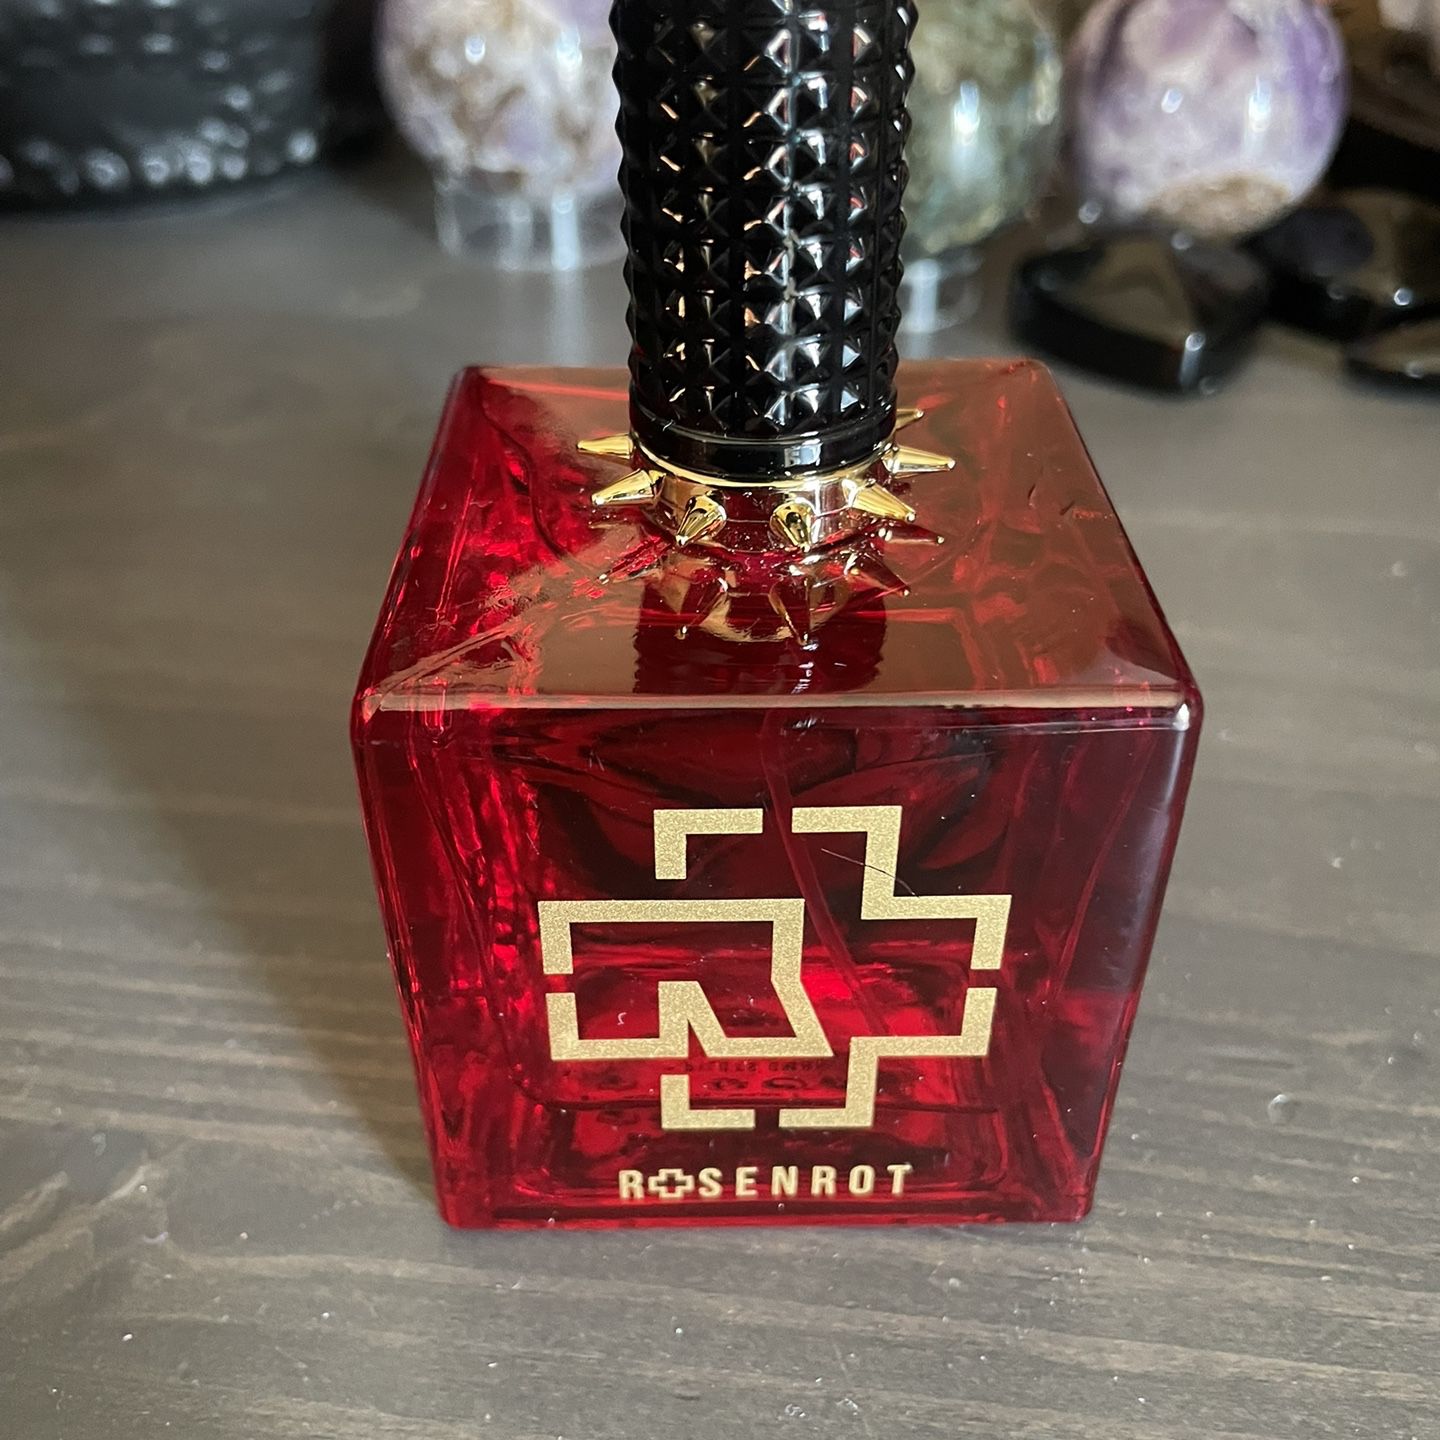 Rammstein Rosenrot Perfume for Sale in Los Angeles, CA - OfferUp